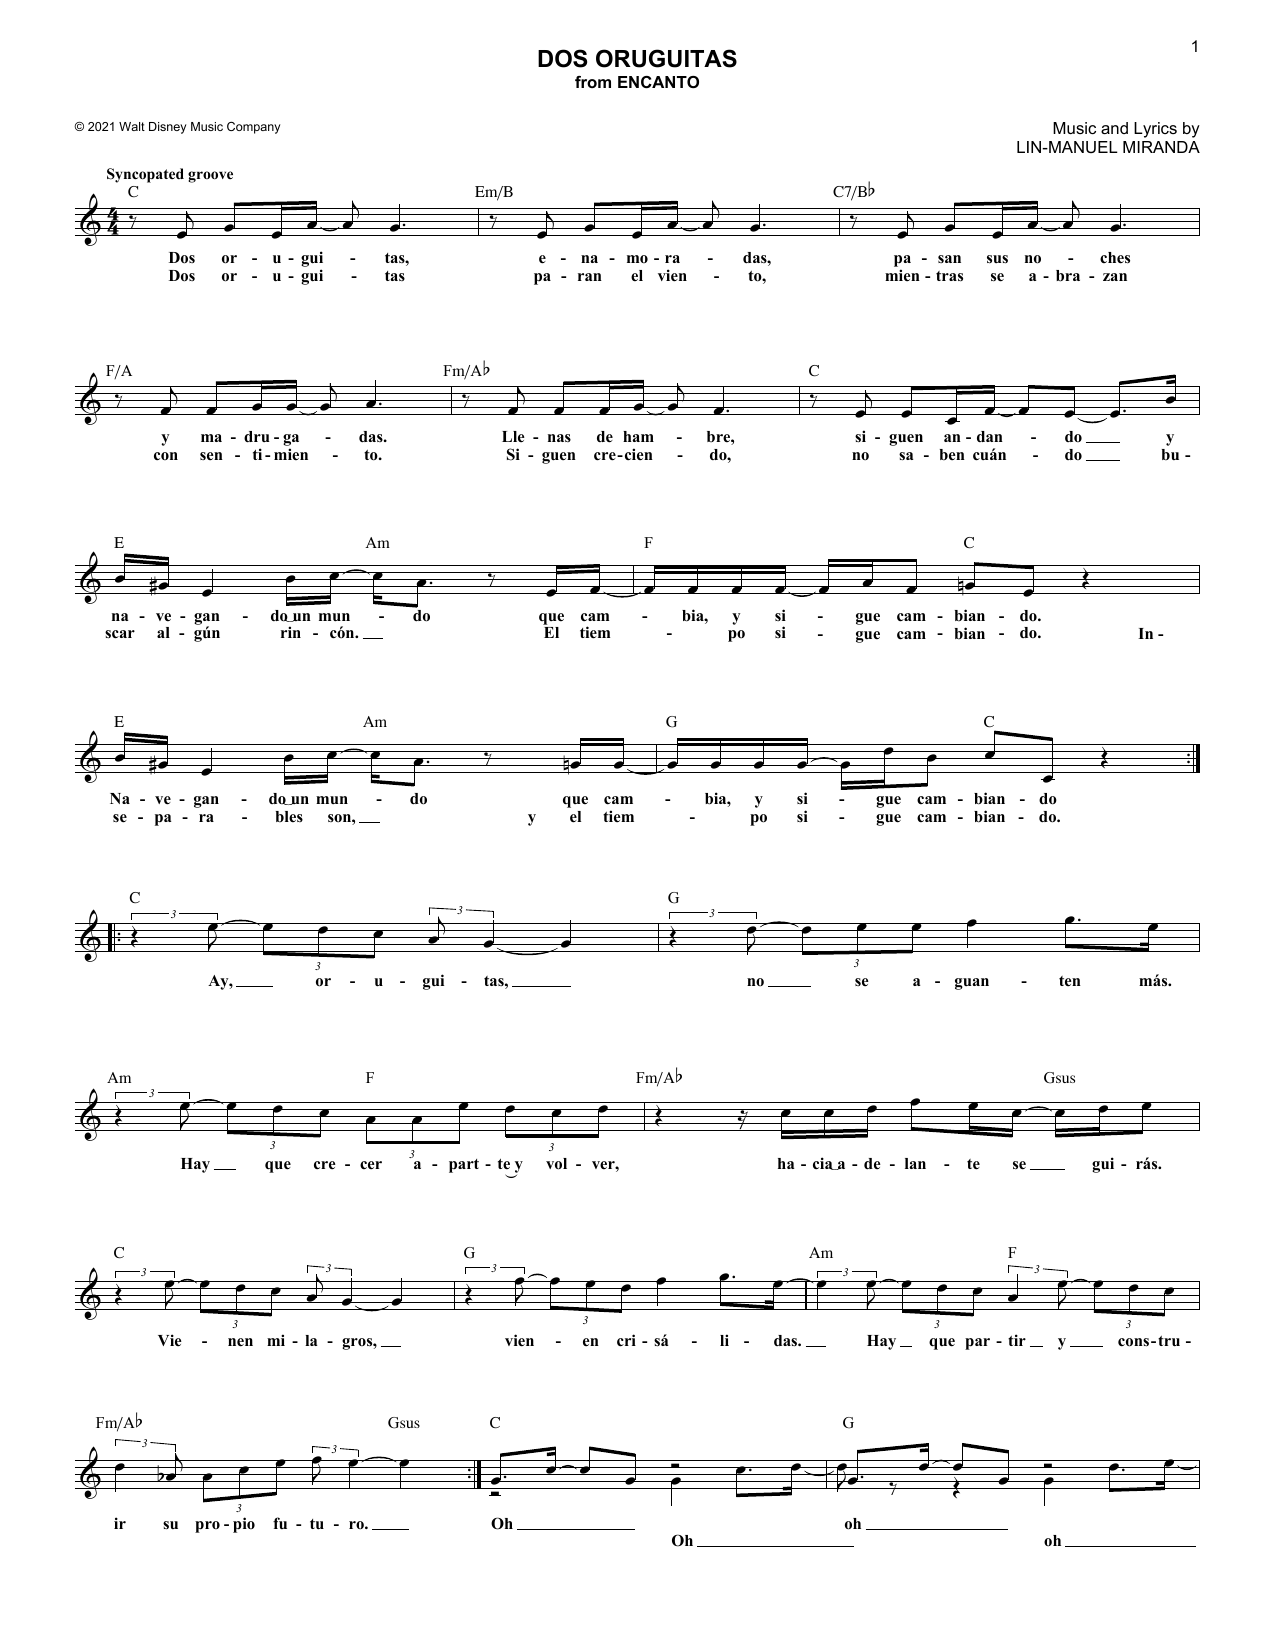 Sebastian Yatra Dos Oruguitas (from Encanto) Sheet Music Notes & Chords for Lead Sheet / Fake Book - Download or Print PDF